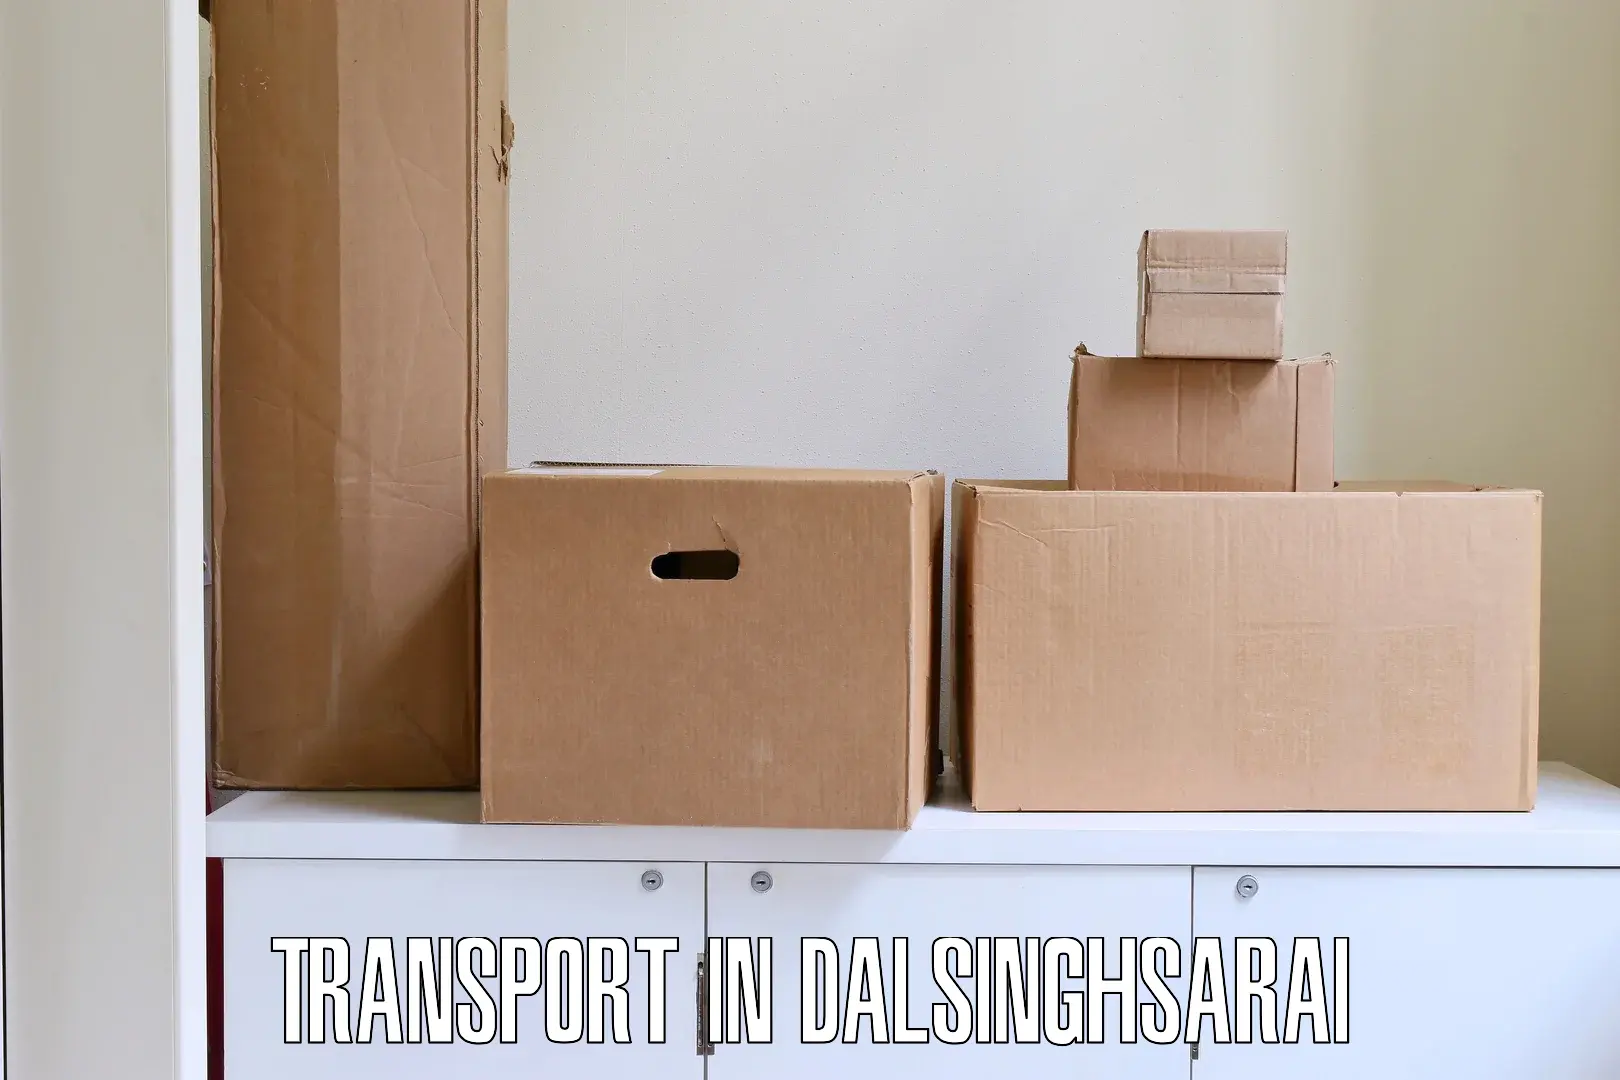 Daily parcel service transport in Dalsinghsarai